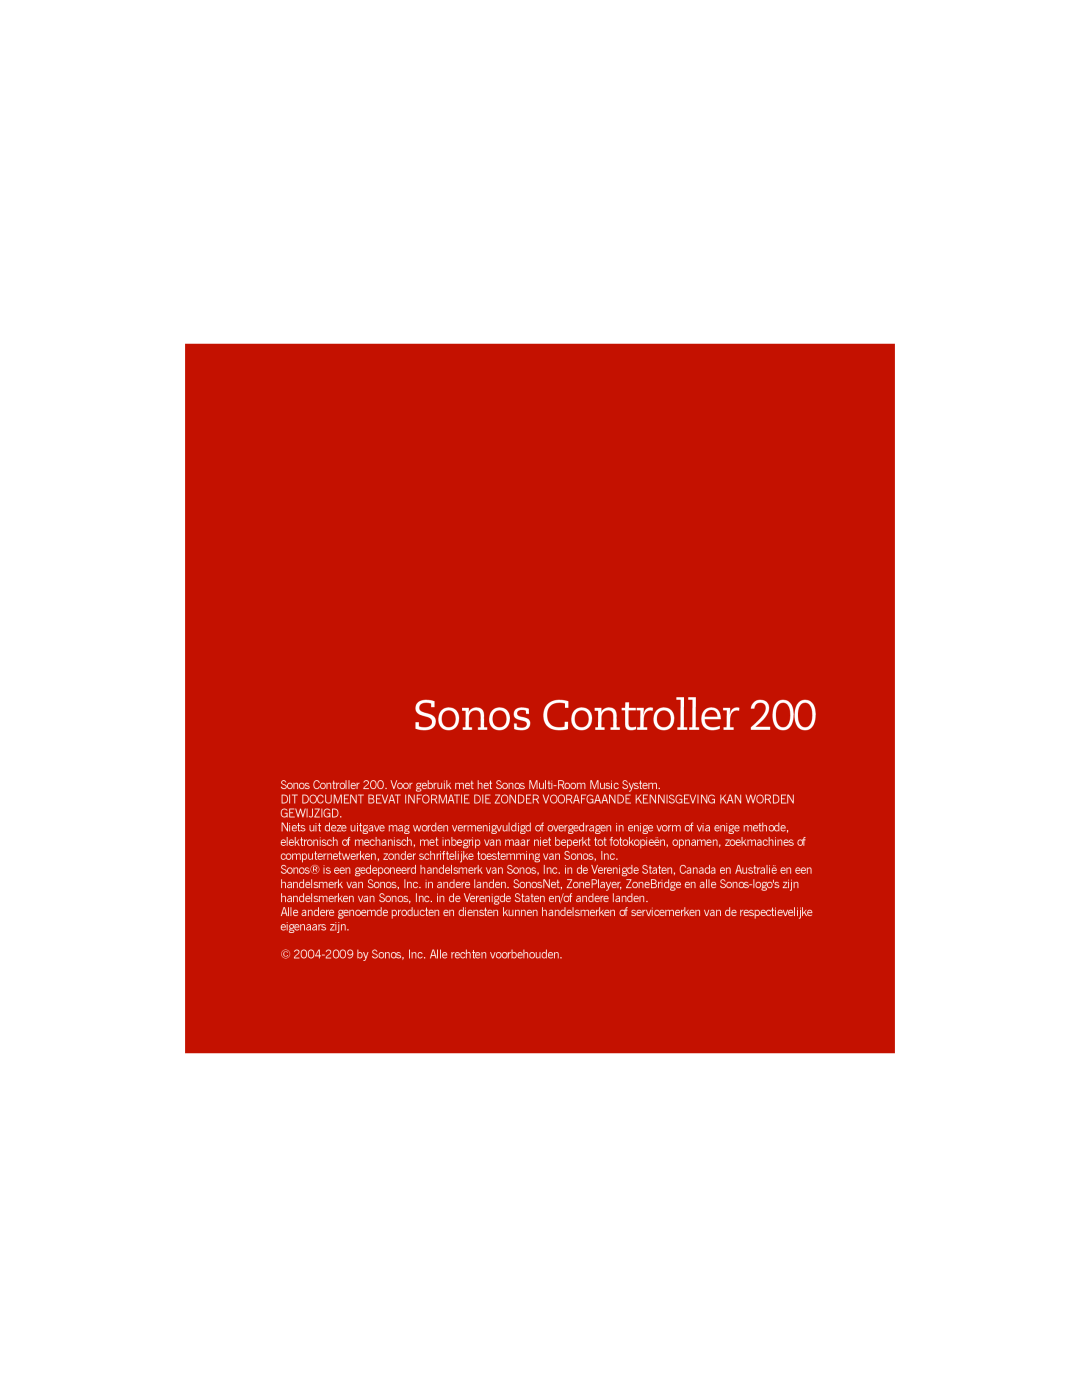 Sonos manual Sonos Controller, 2004-2009by Sonos, Inc. Alle rechten voorbehouden 